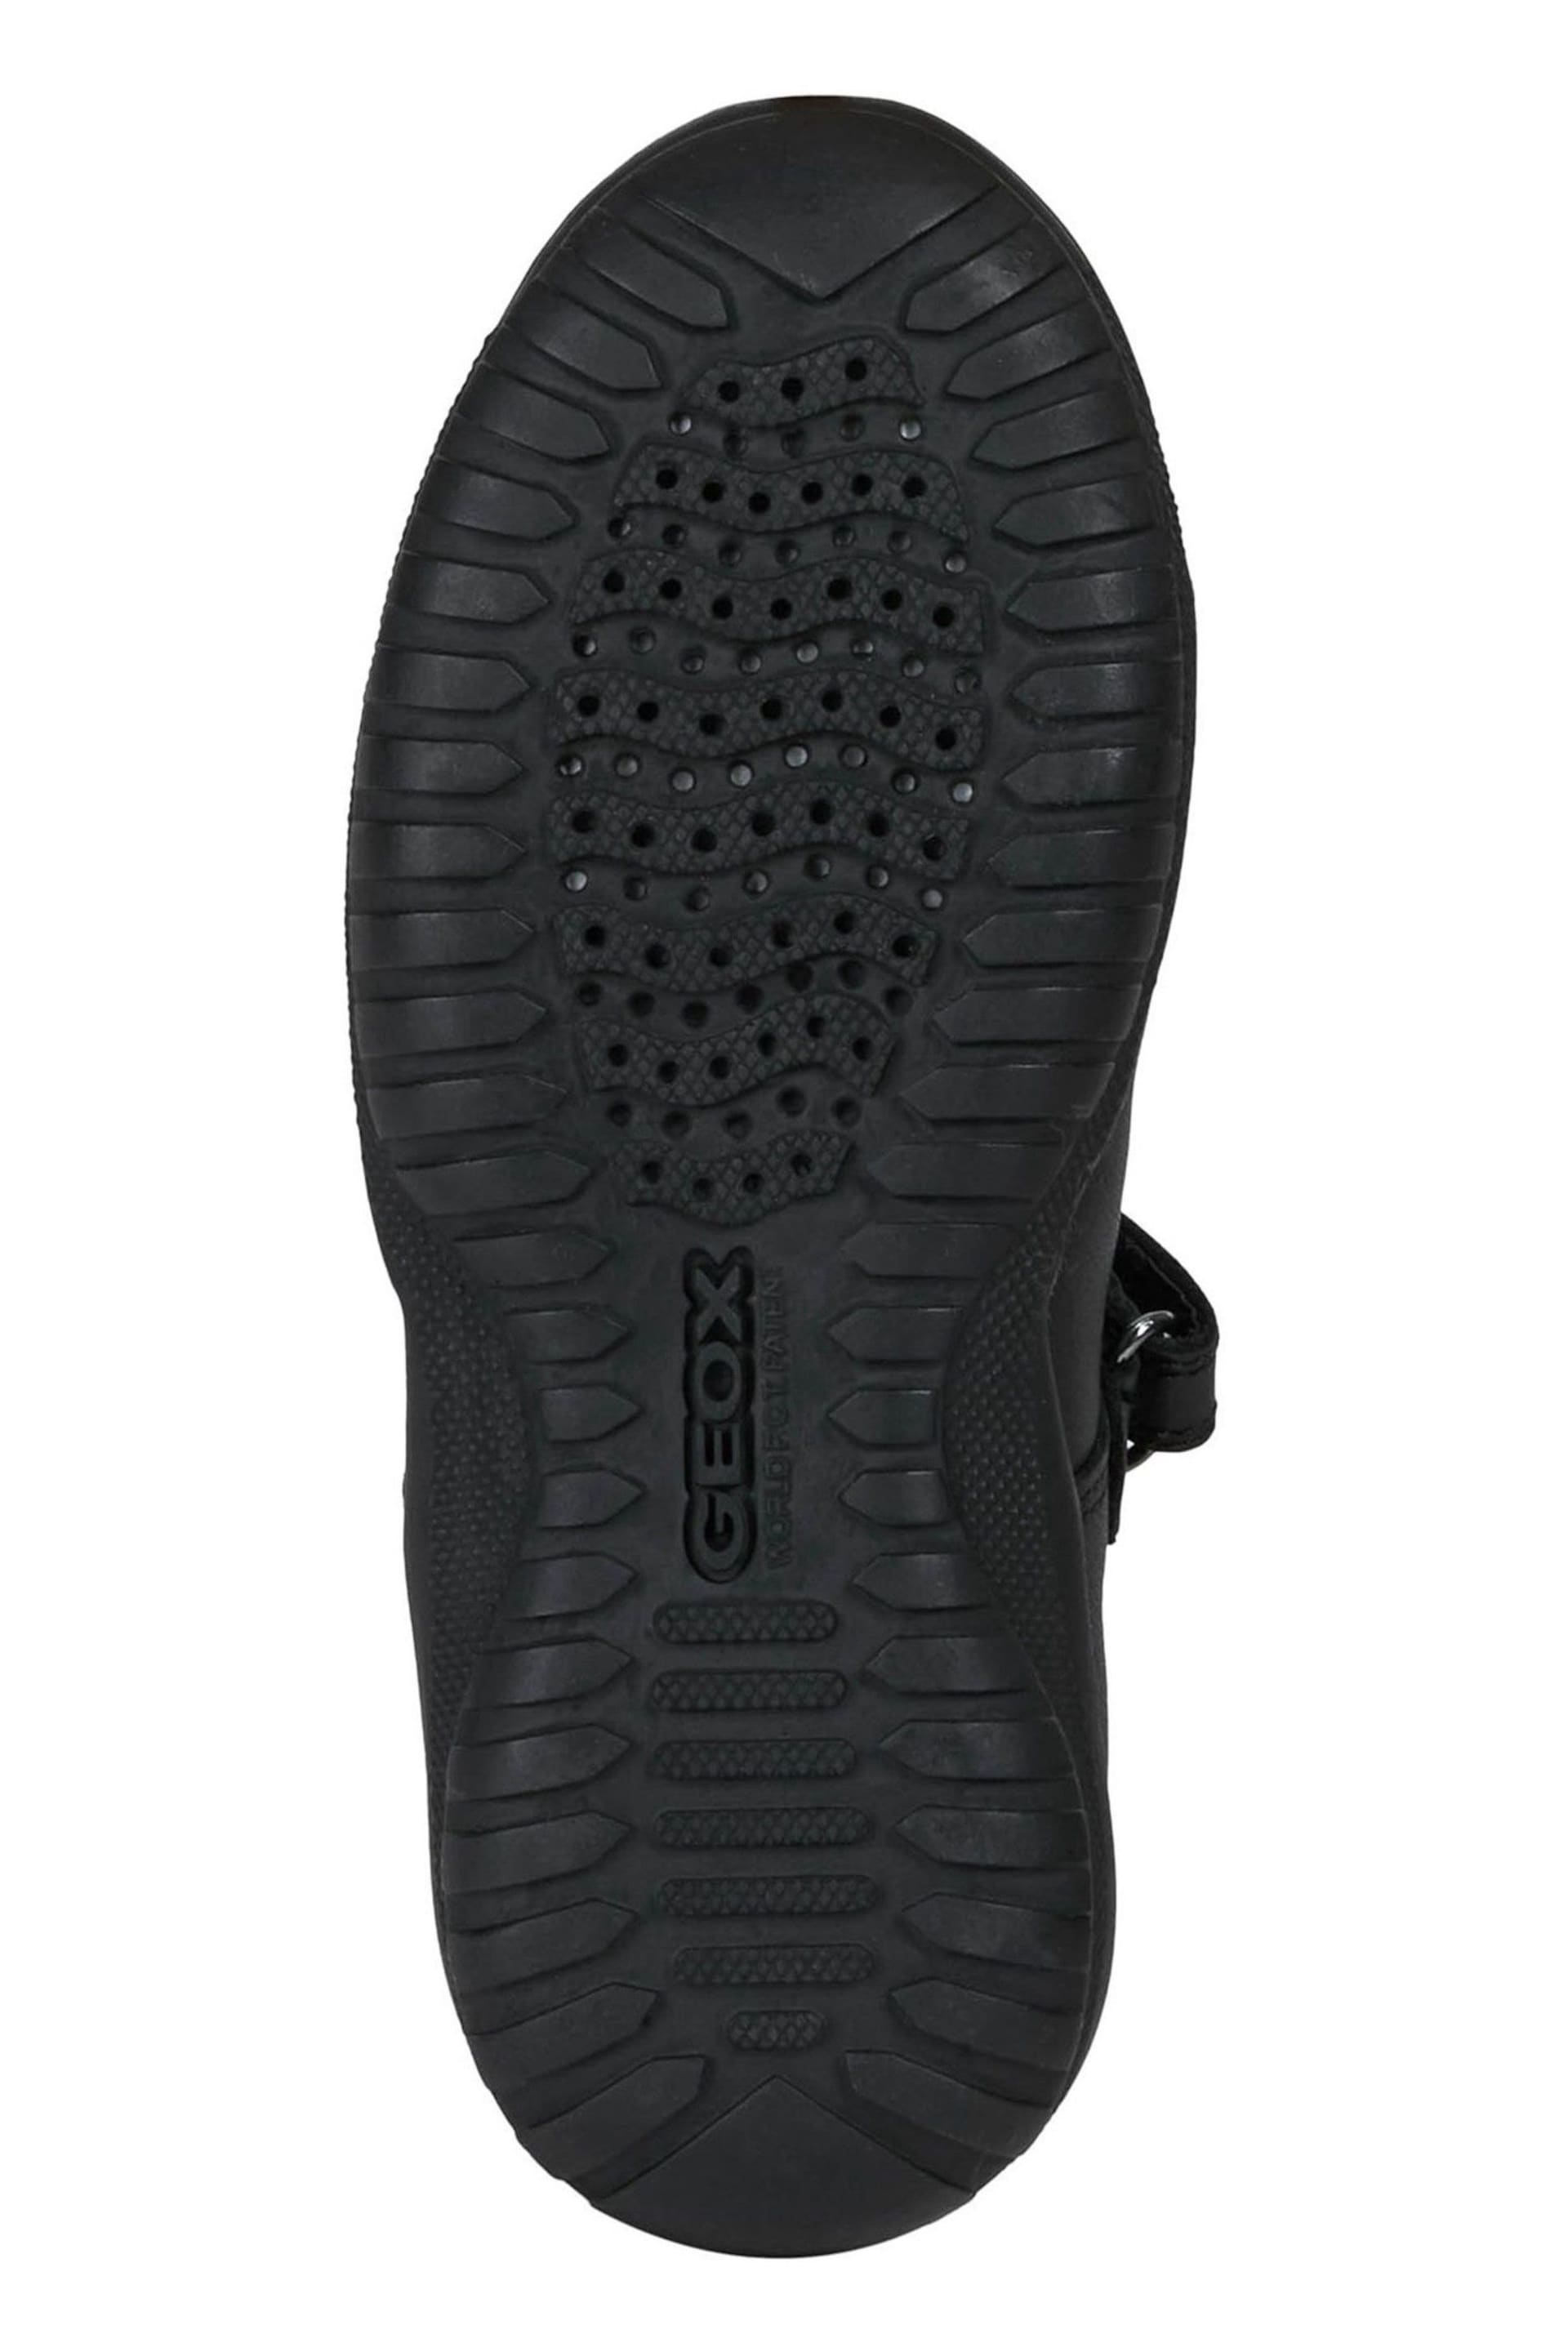 Geox Black  Jr Shadow B Shoes - Image 5 of 5